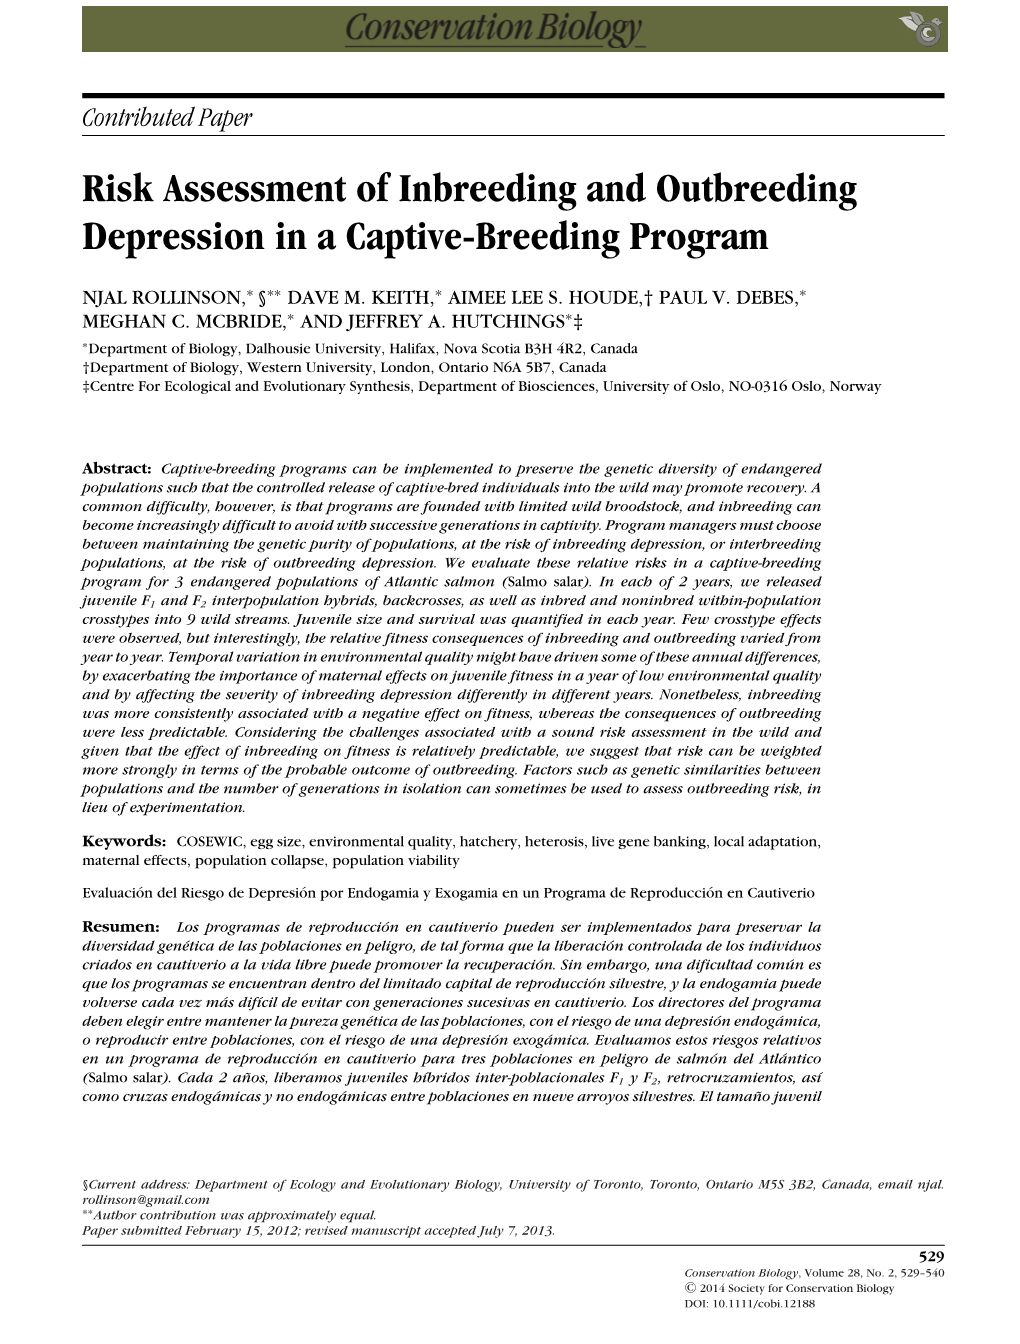 Risk Assessment of Inbreeding and Outbreeding Depression in a Captive-Breeding Program